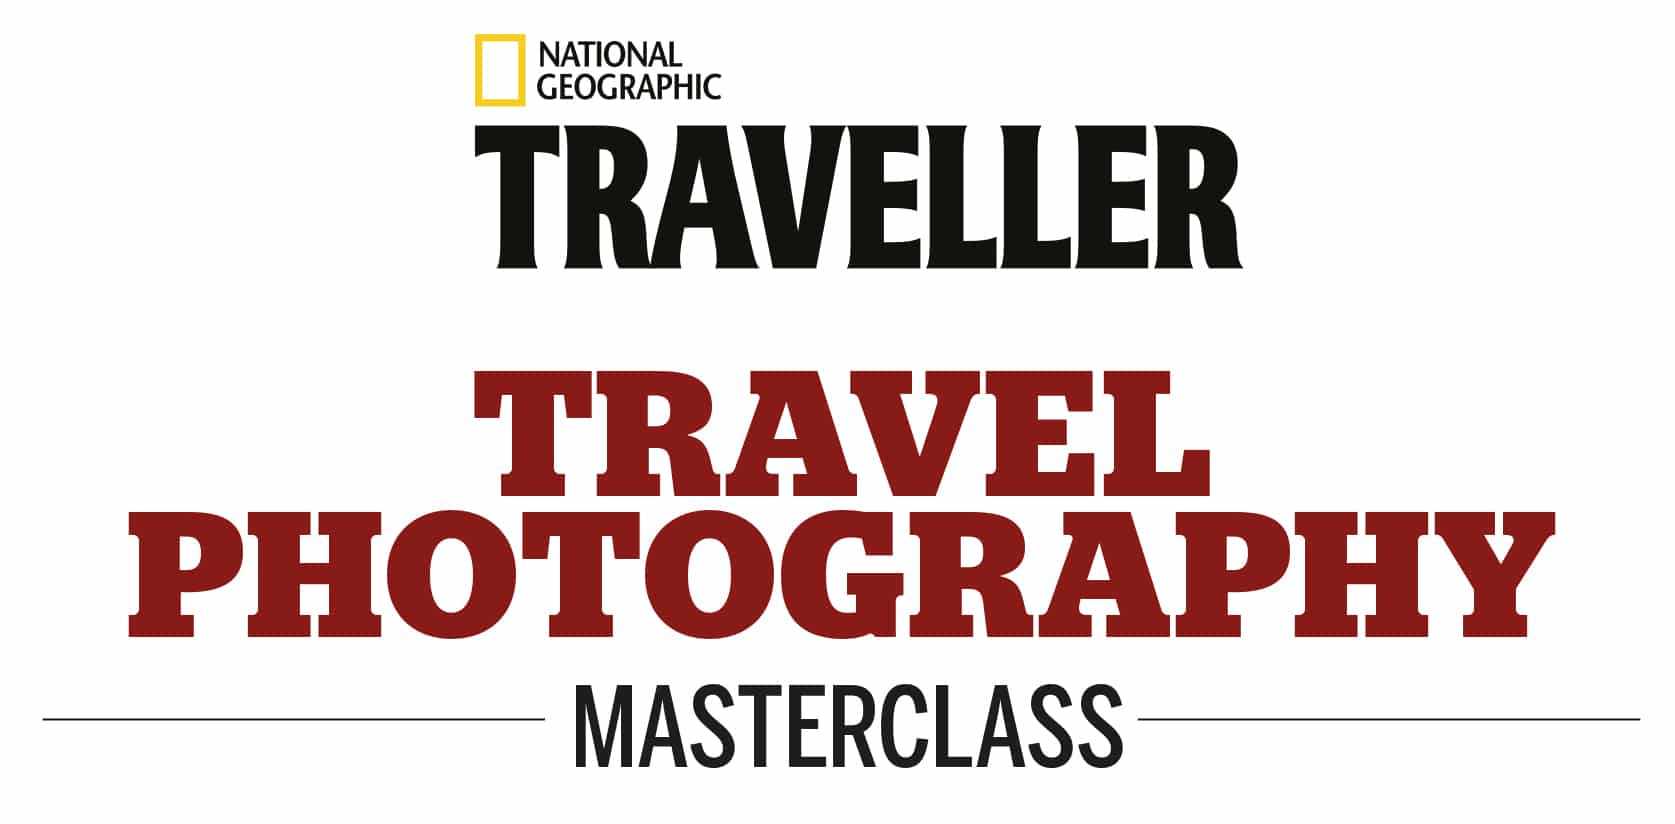 Travel photography masterclass